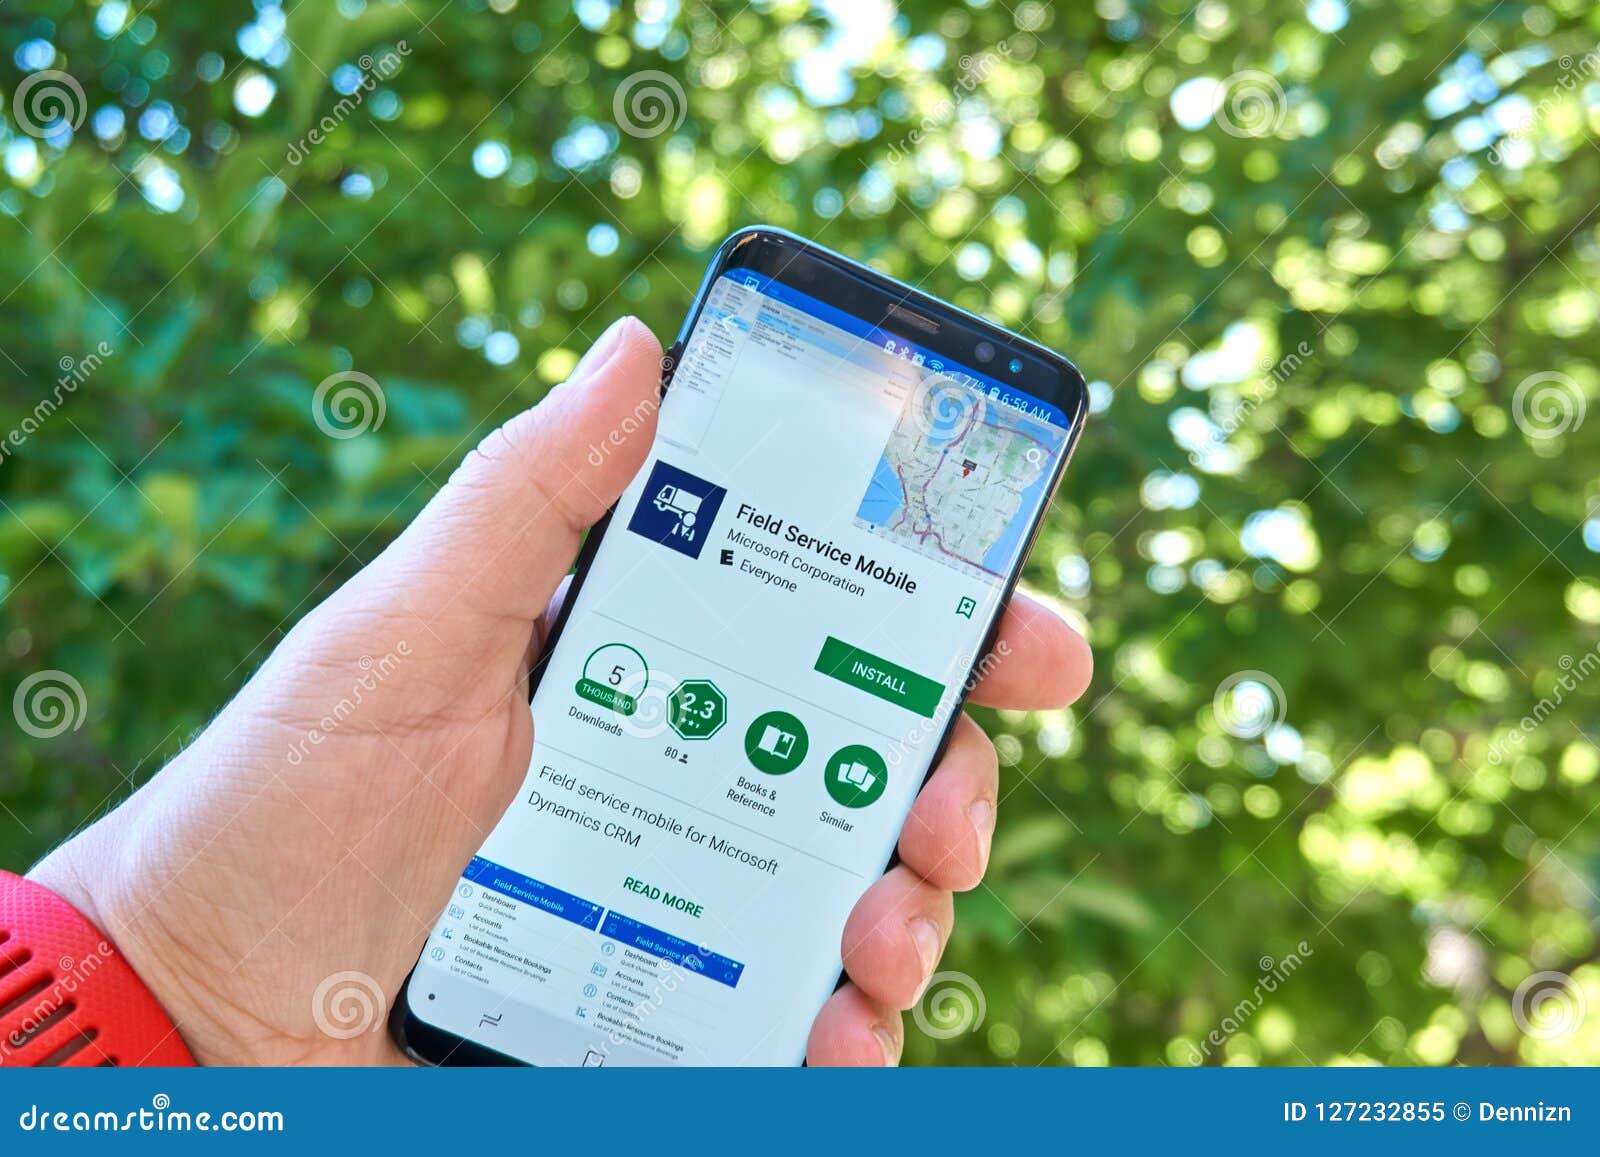 Microsoft Field Service Mobile App On Samsung S8 ...